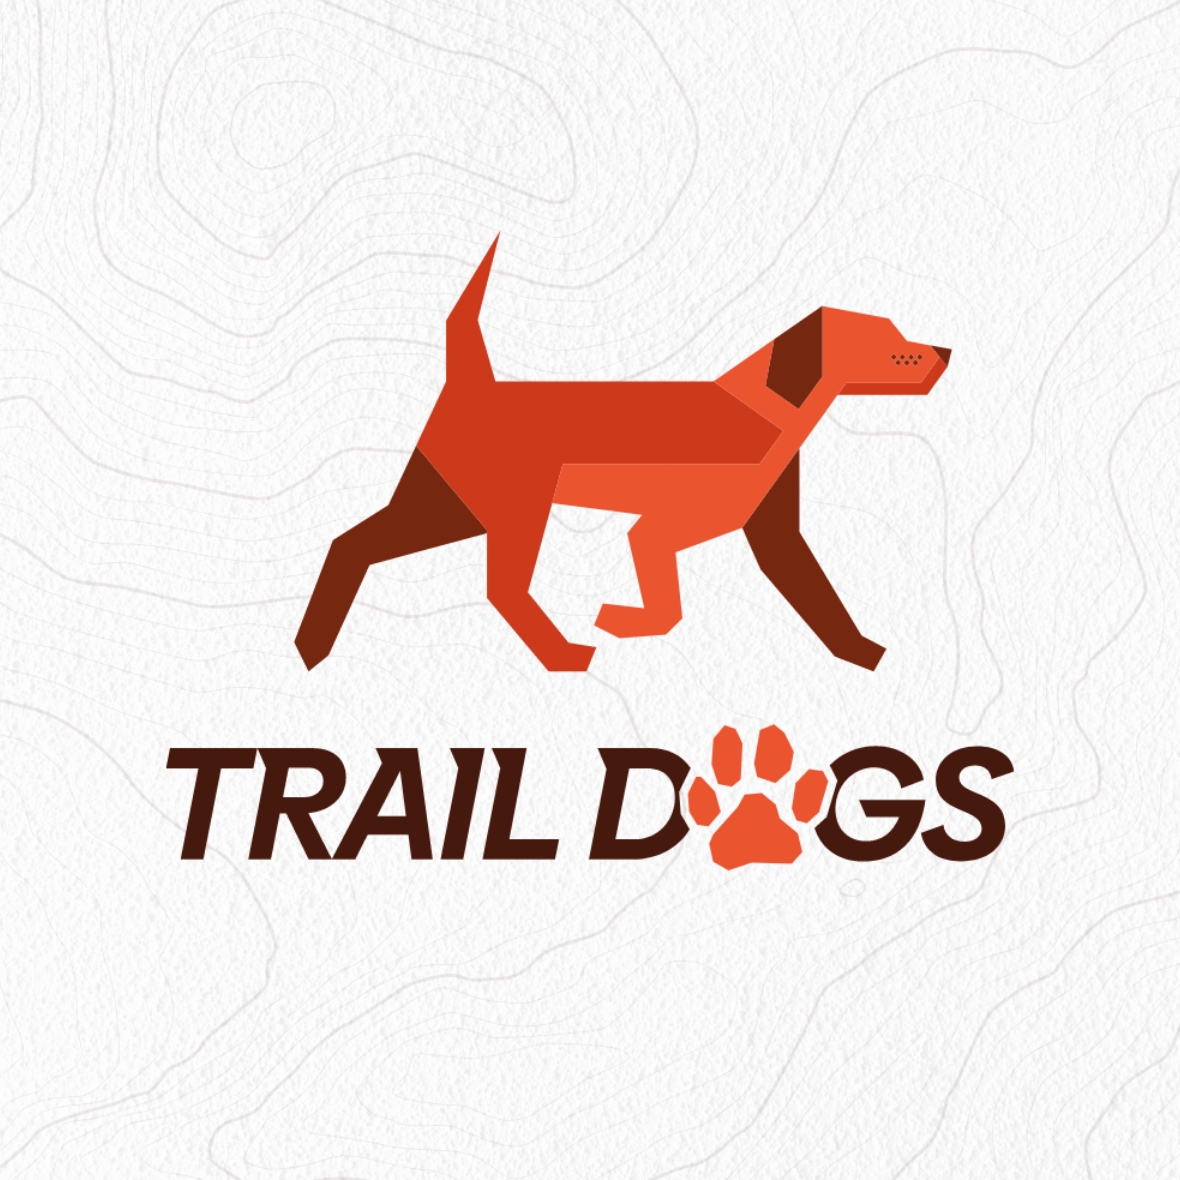 Trail Dogs Logo Design